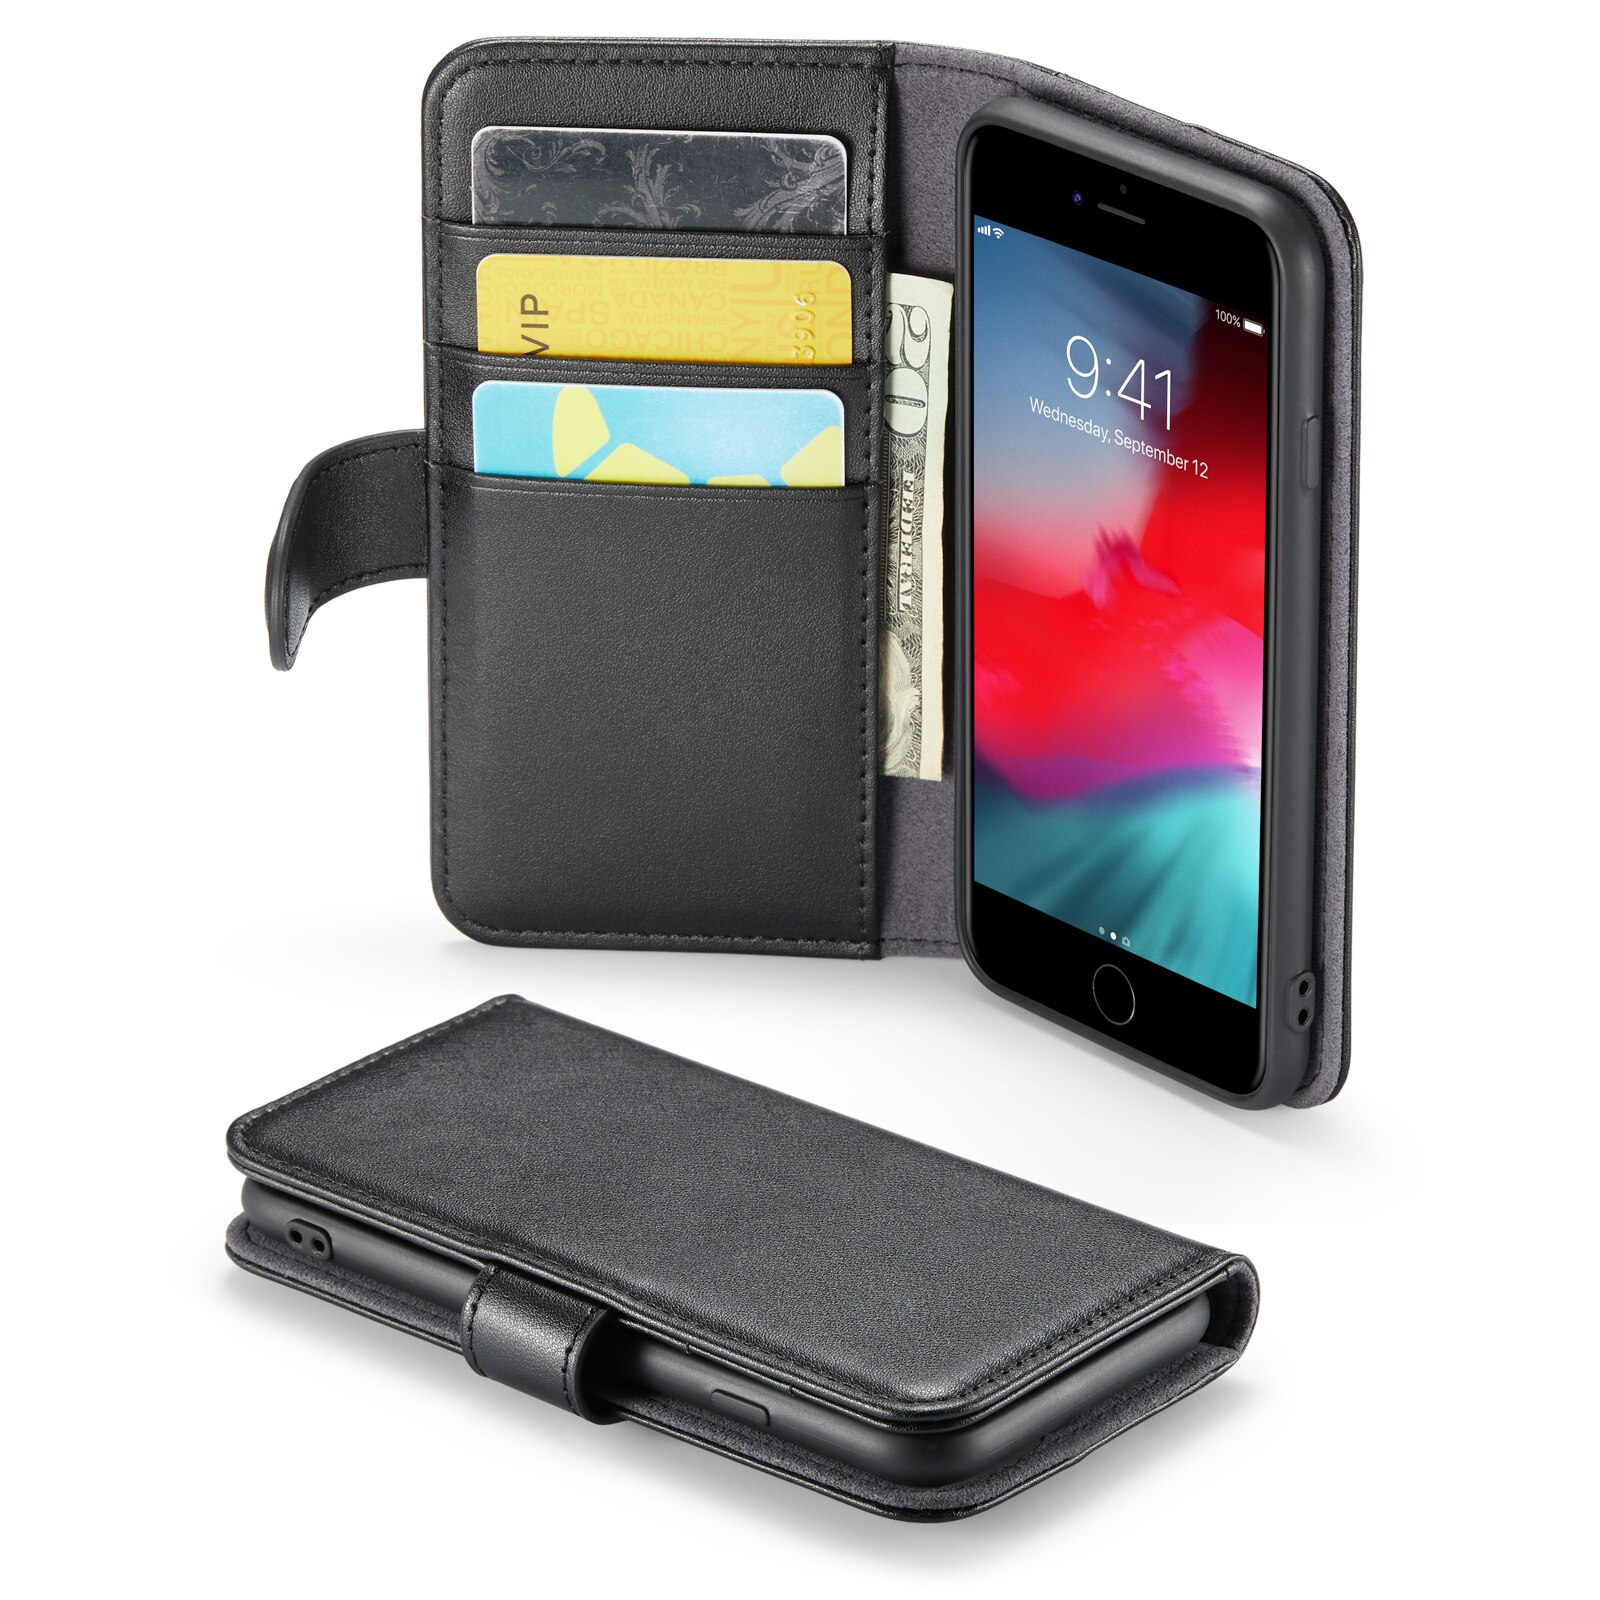 iPhone SE (2022) Genuine Leather Wallet Case Black